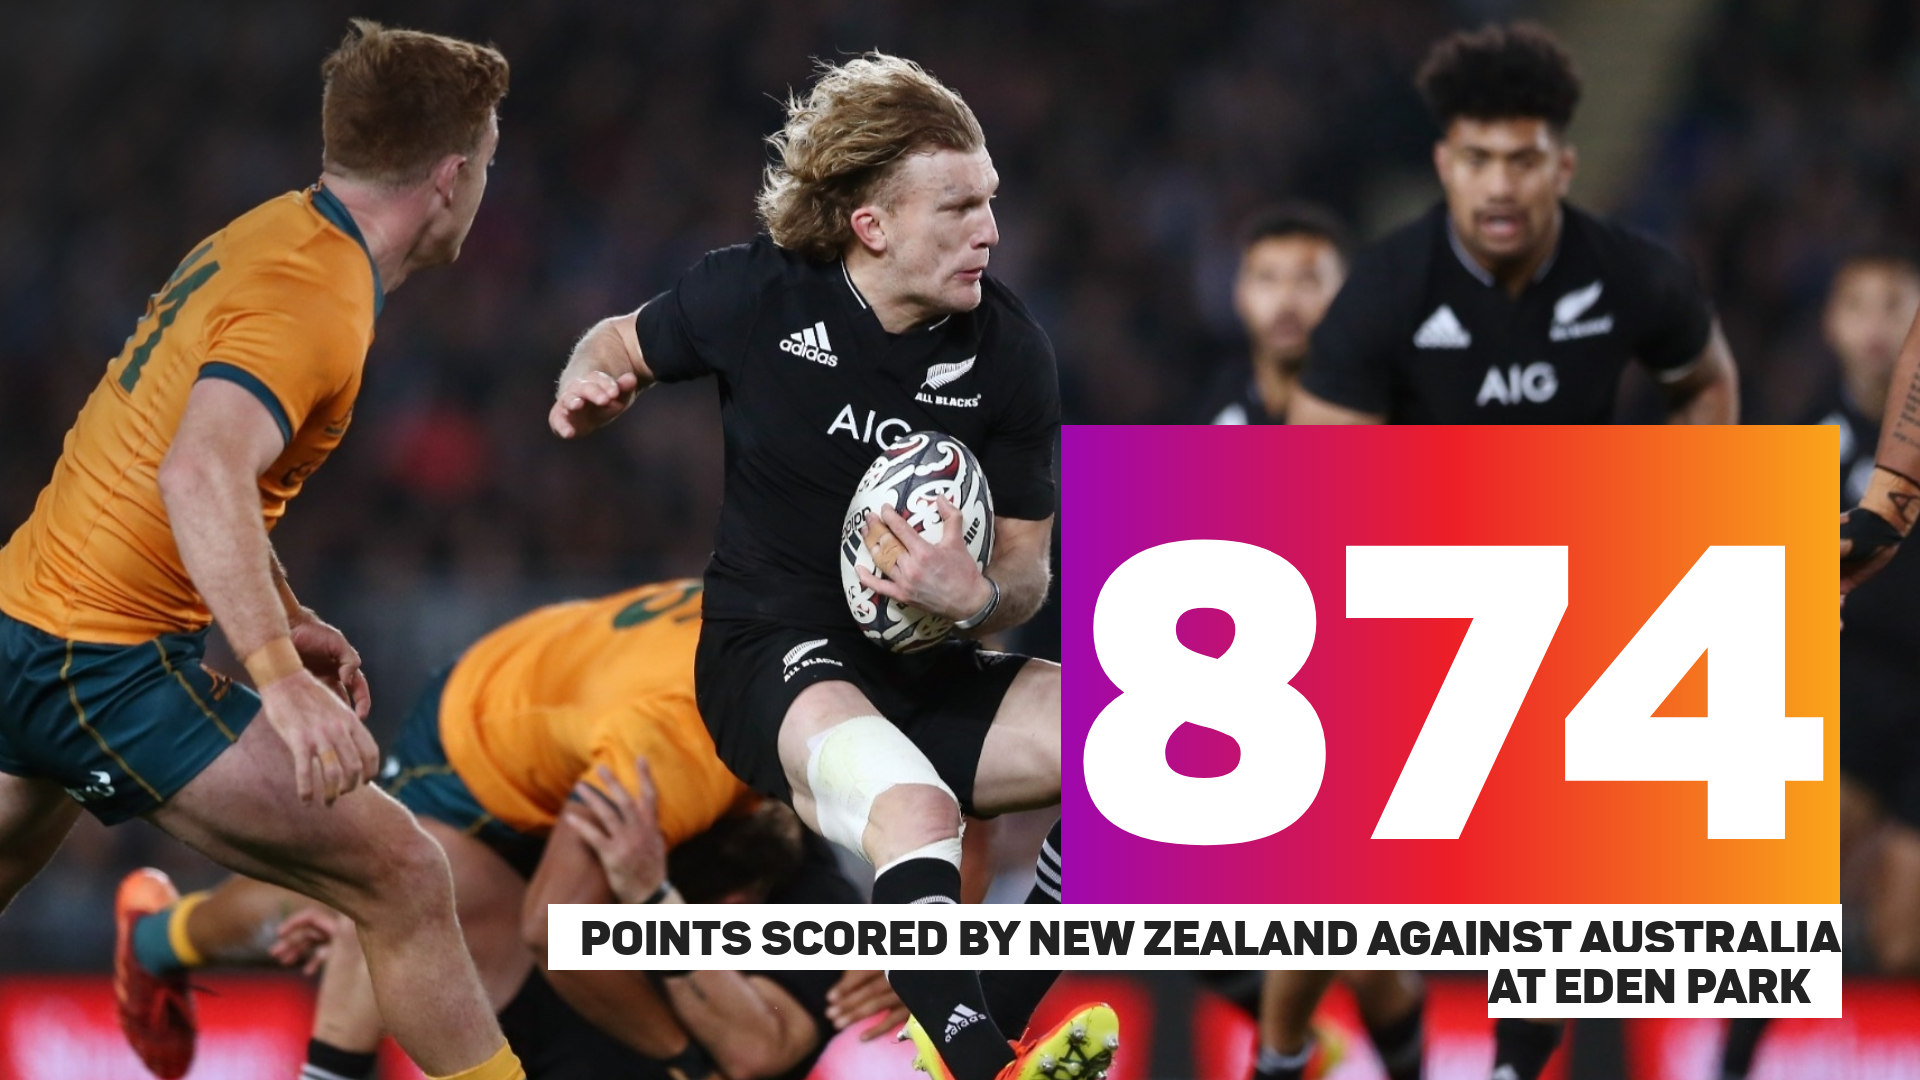 New Zealand points against Australia at Eden Park